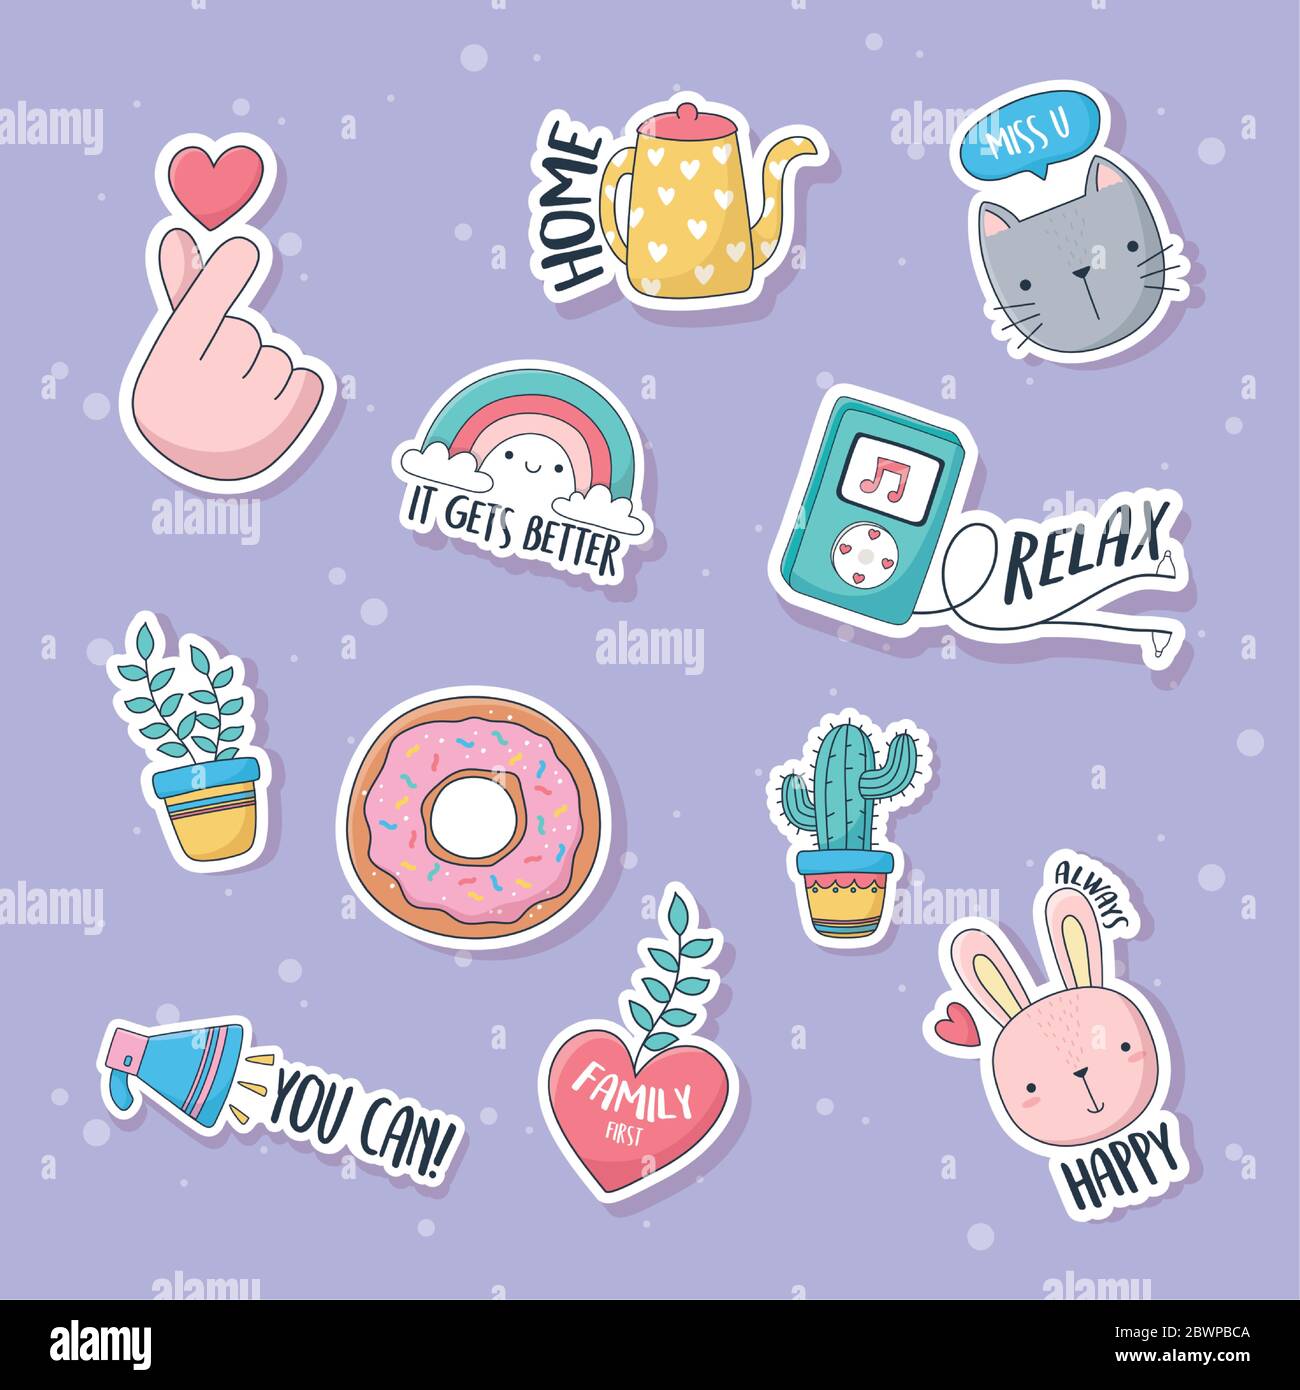 https://c8.alamy.com/comp/2BWPBCA/cute-love-rainbow-plant-rabbit-cat-decoration-stuff-for-cards-stickers-or-patches-cartoon-vector-illustration-2BWPBCA.jpg